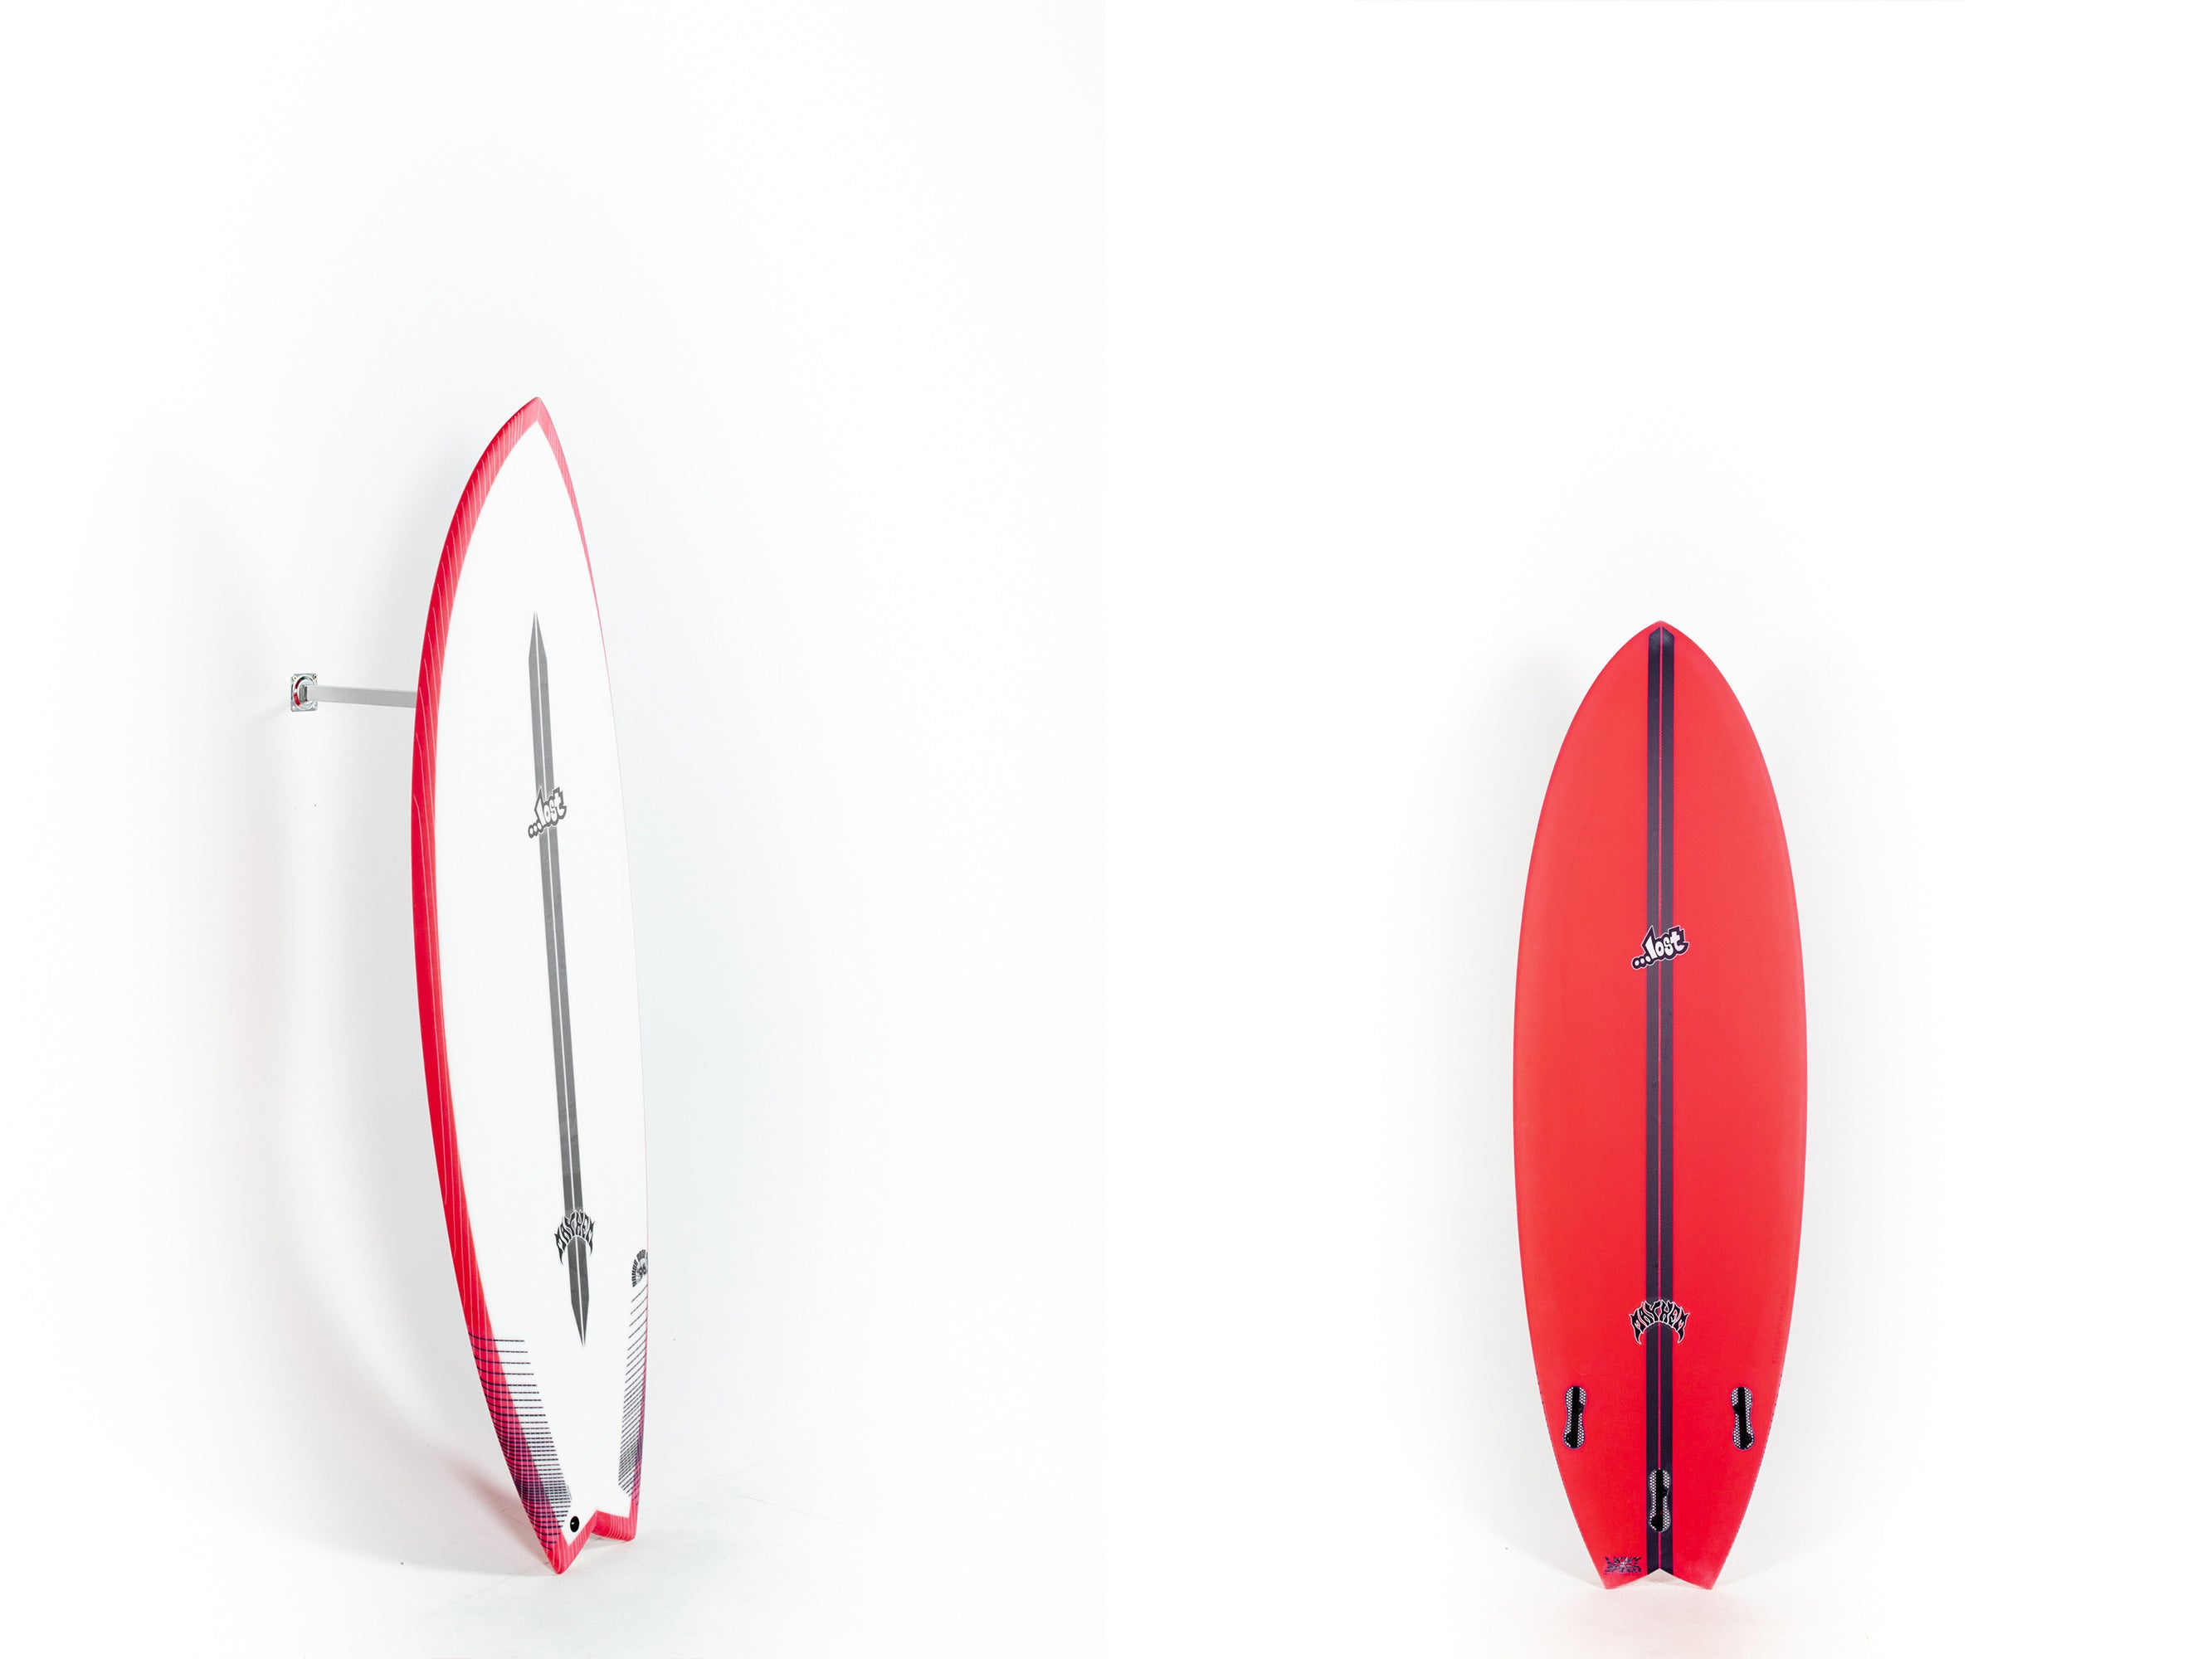 Lost Surfboard - ROUND NOSE FISH - RNF '96 - Light Speed - 5'7"x 20" x 2.44 x 31L